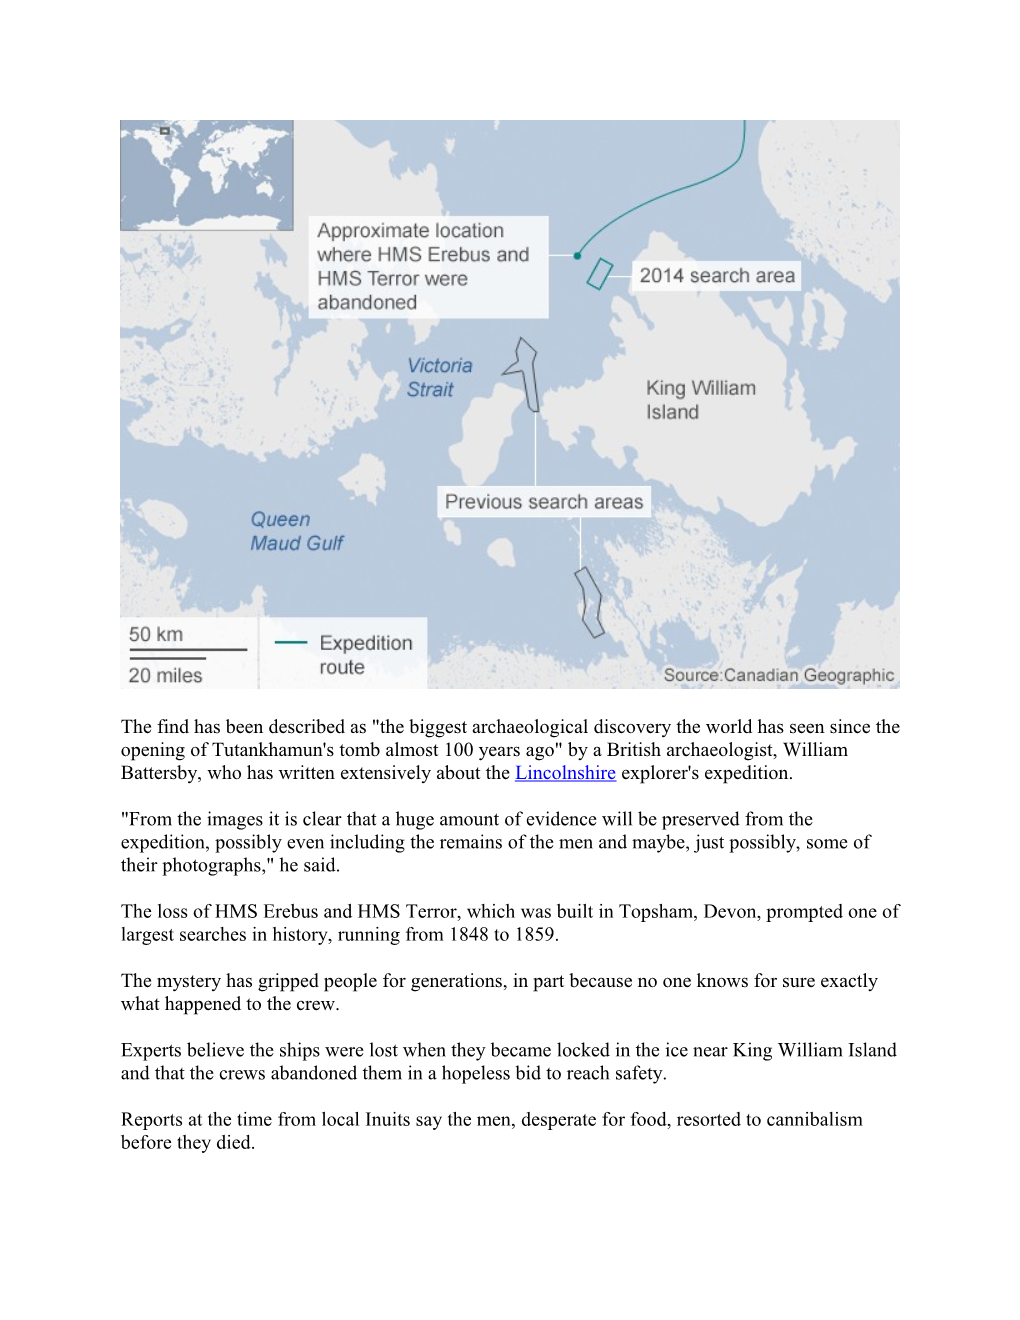 Sir John Franklin: Fabled Arctic Ship Found